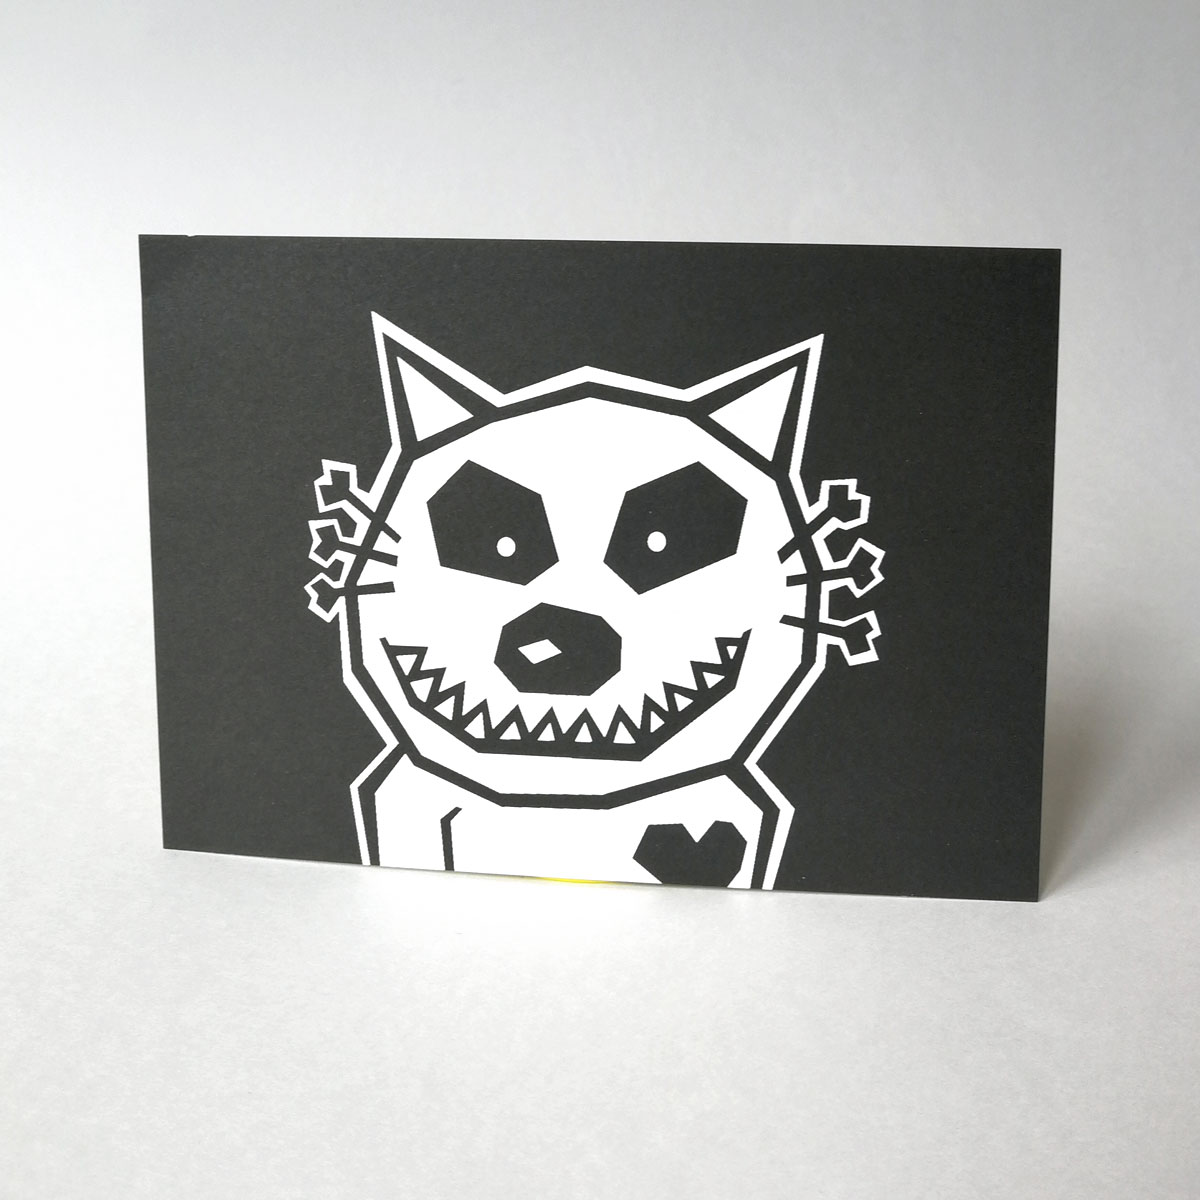 Belbonny (Katze). Recycling-Postkarten mit Monster